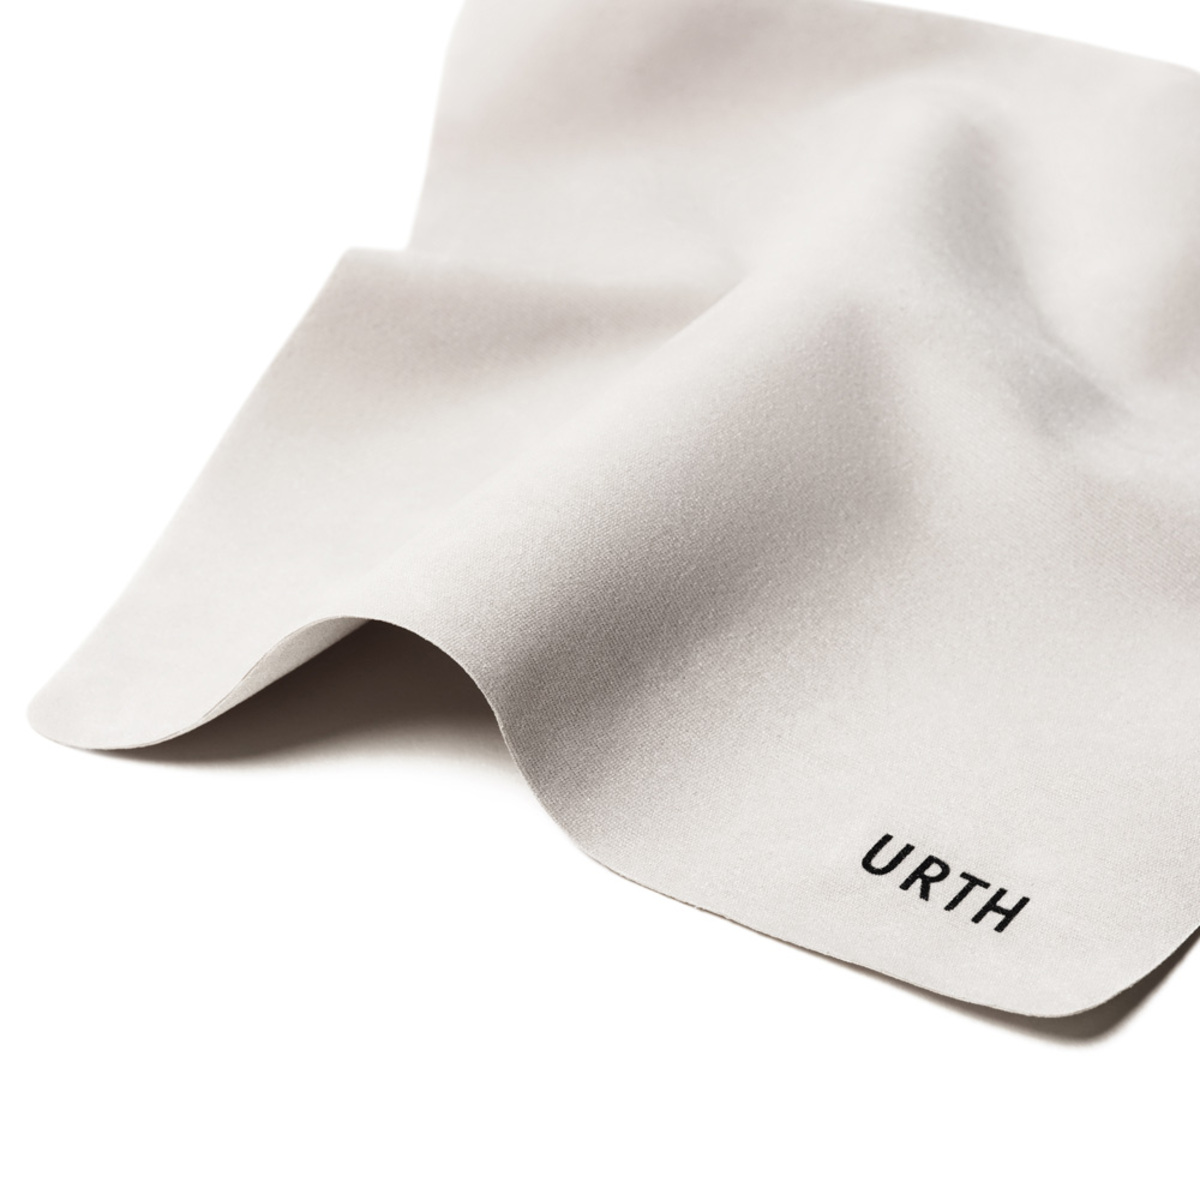 Urth 40.5mm Ethereal ¼ Black Mist Objektivfilter (Plus+)